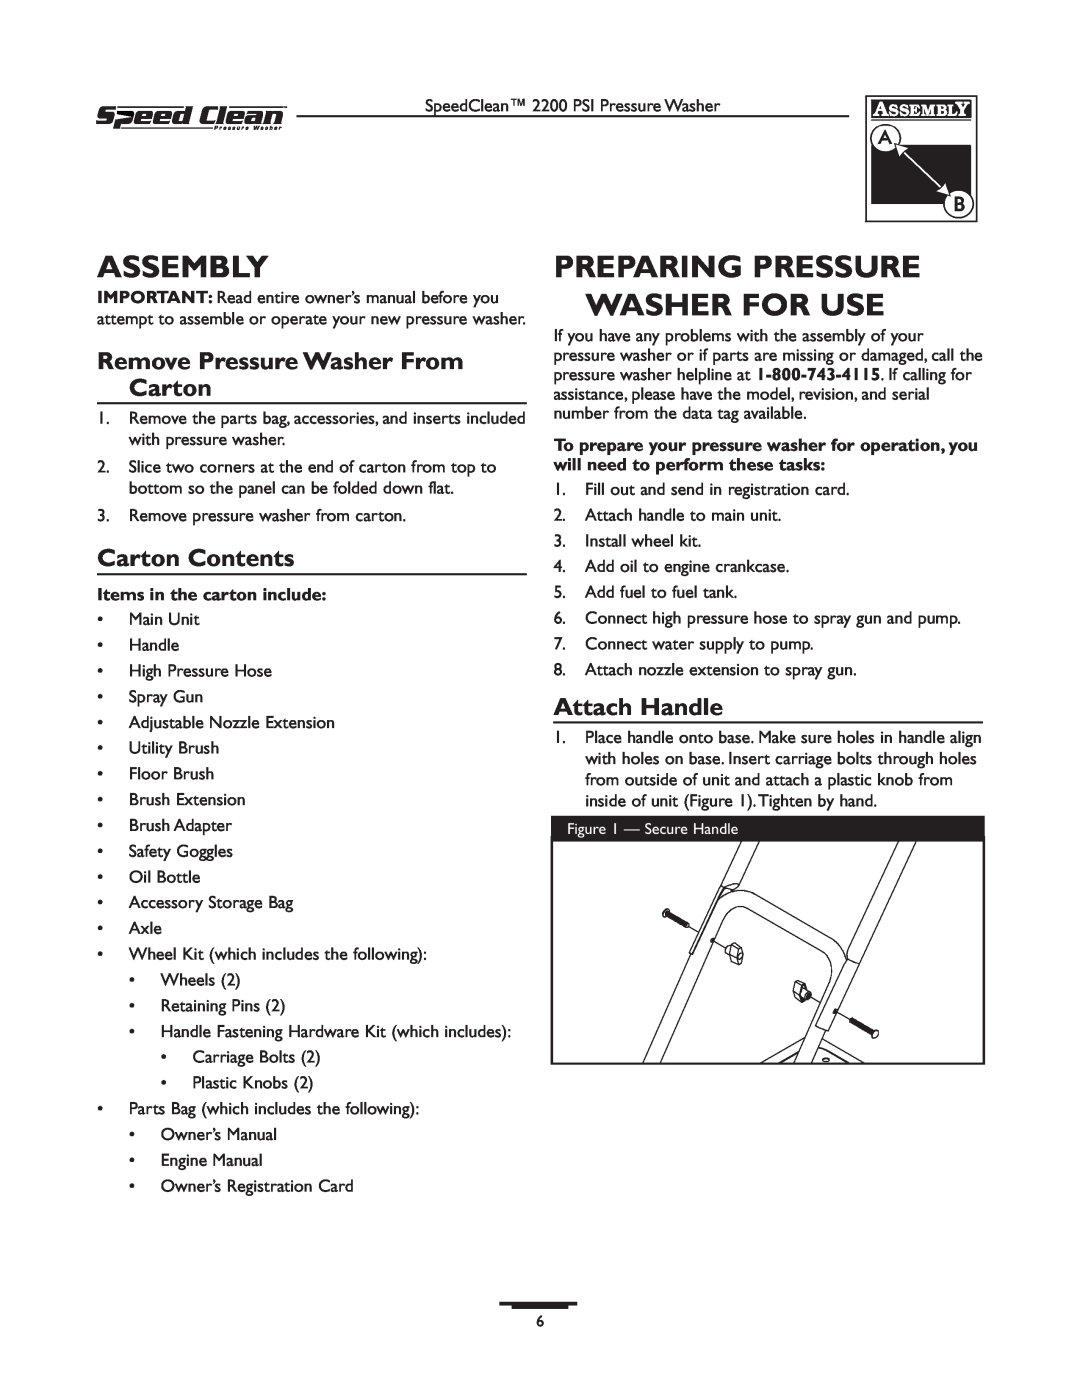 Briggs & Stratton 020239-0 Assembly, Preparing Pressure Washer For Use, Remove Pressure Washer From Carton, Attach Handle 